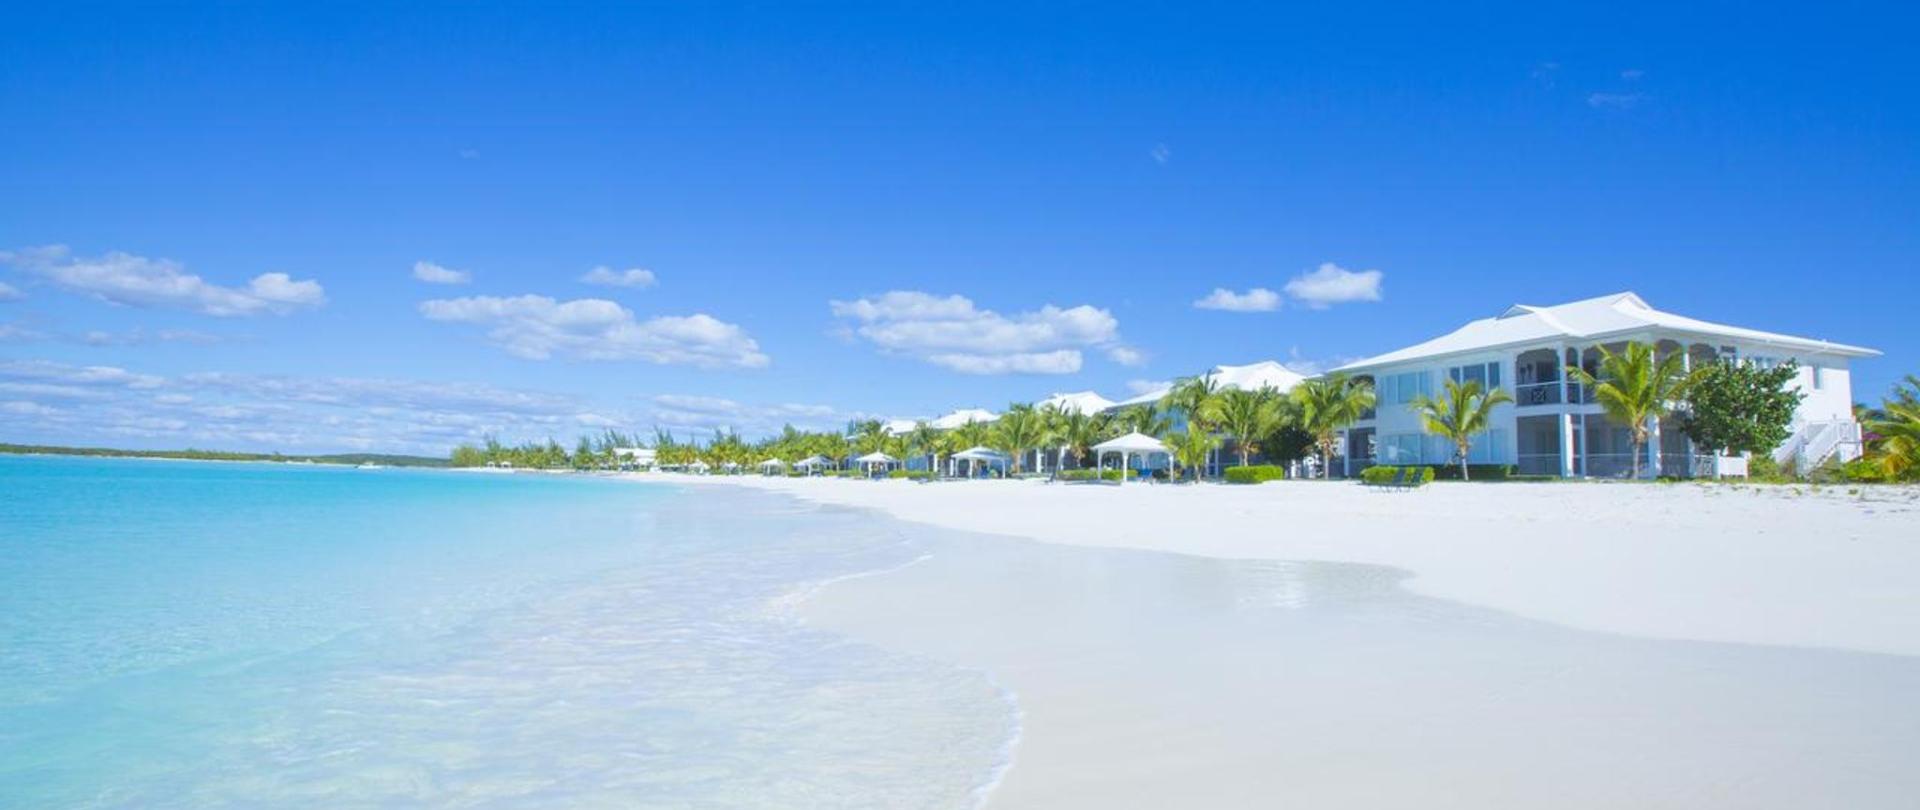 Cape Santa Maria Beach Resort And Villas Bahamas